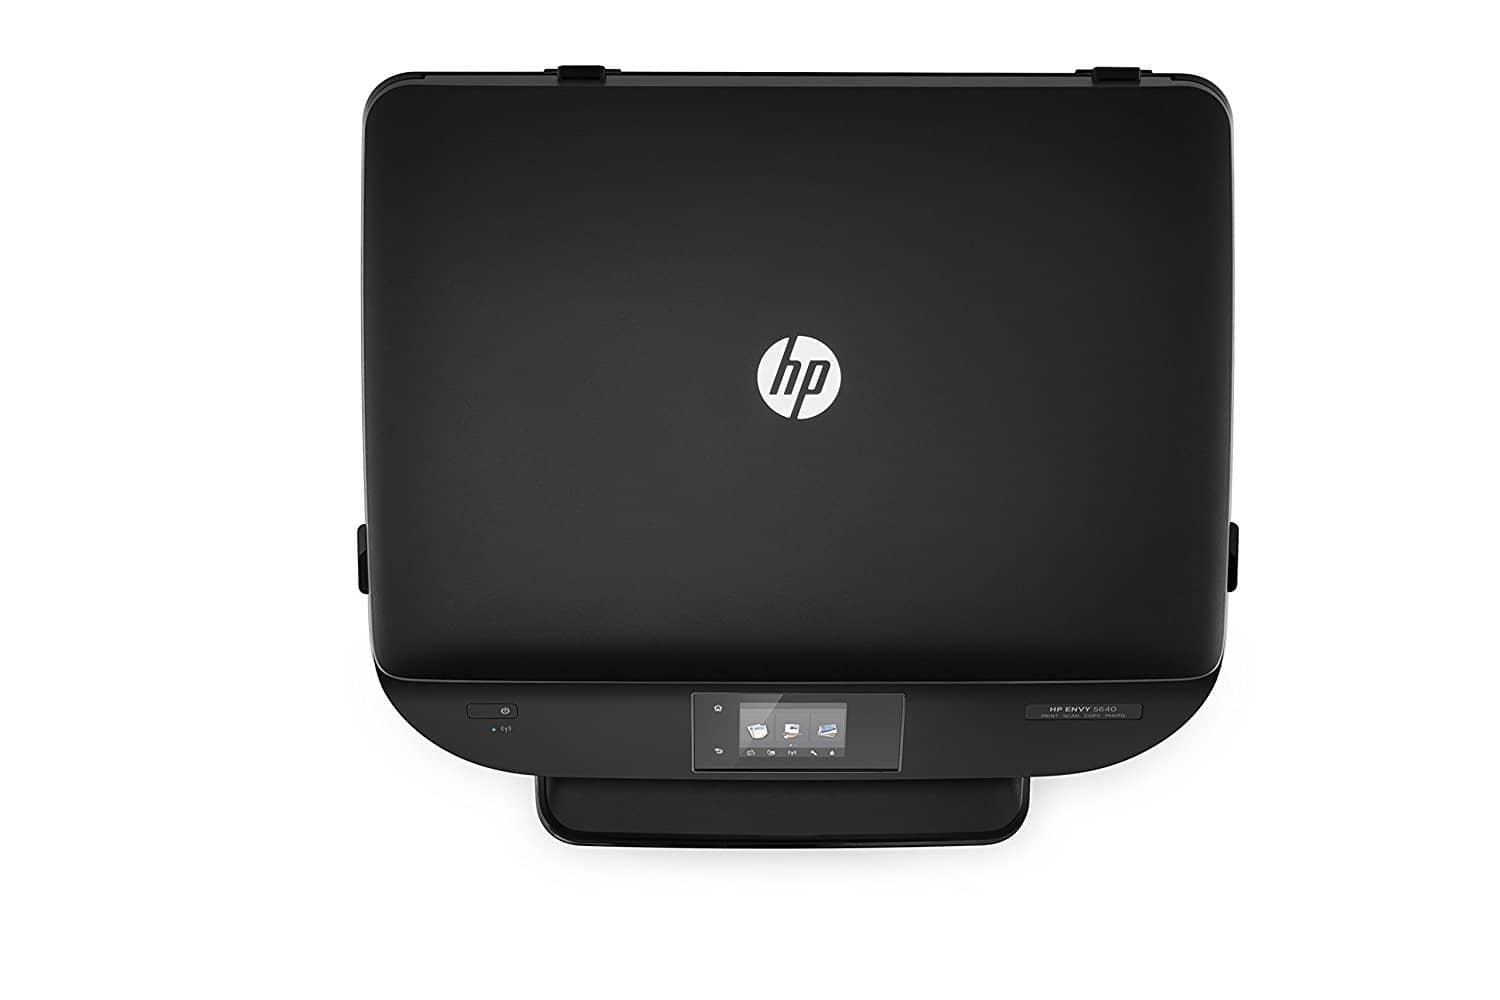 HP ENVY 5640 Colour Multifunctional Printer